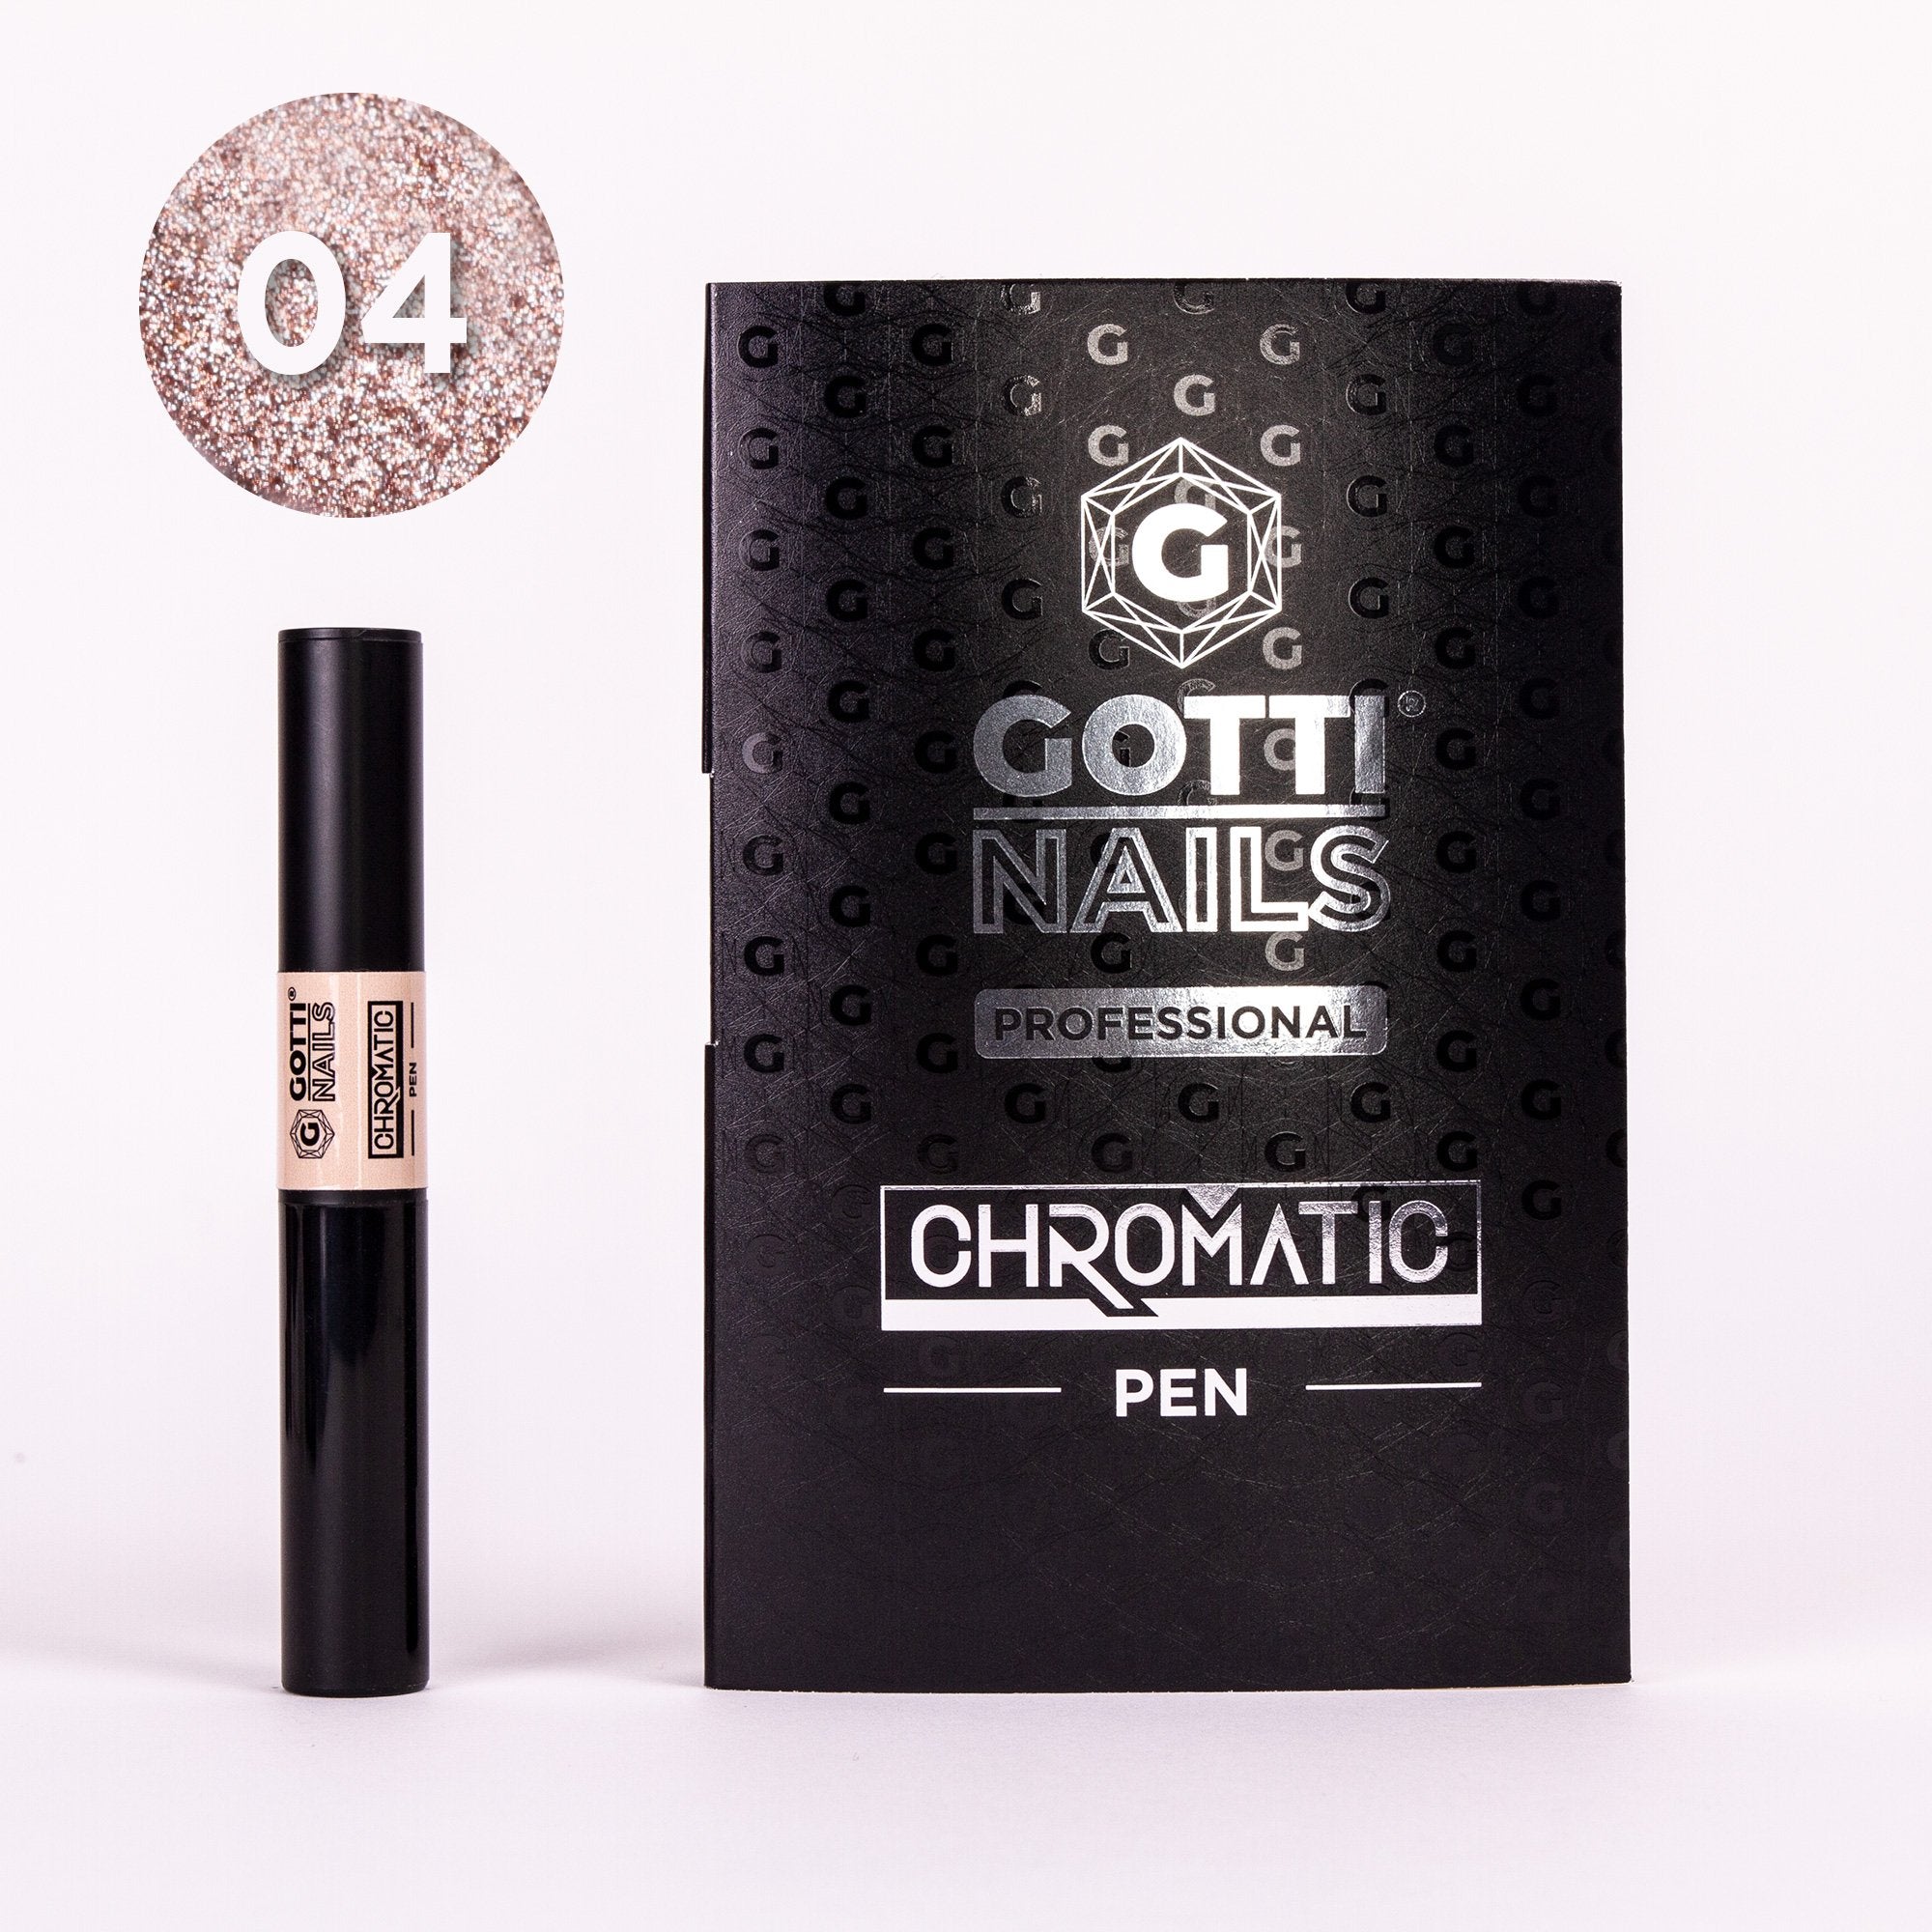 Chromatic Pen #04 by Gotti Nails